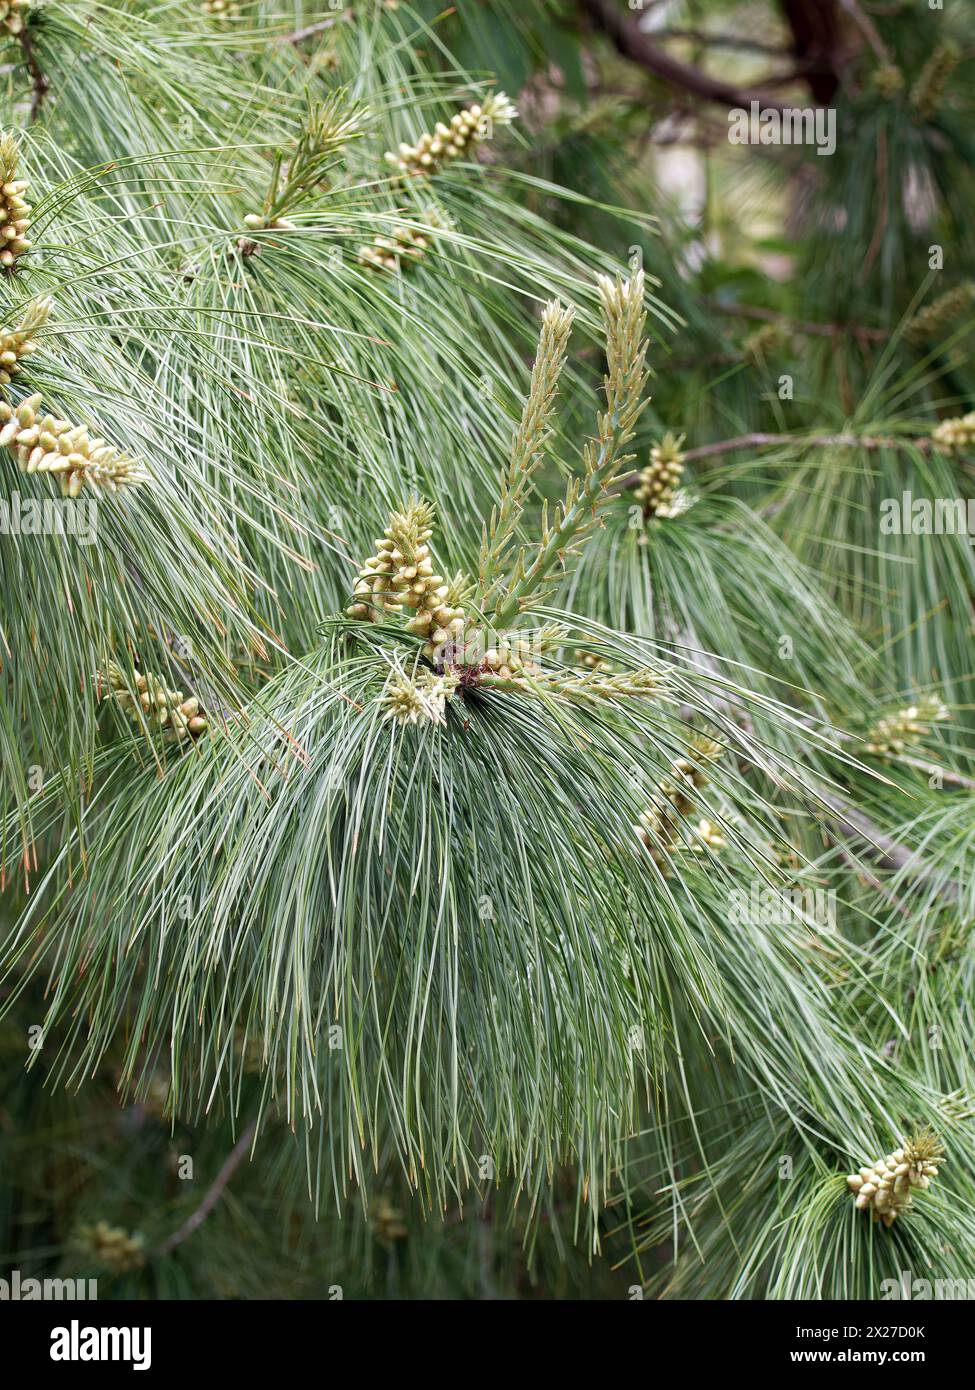 Armand pine, Chinese white pine, Armands Kiefer, pin d'Armand, Pinus armandii, kínai selyemfenyő, Hungary, Magyarország, Europe Stock Photo